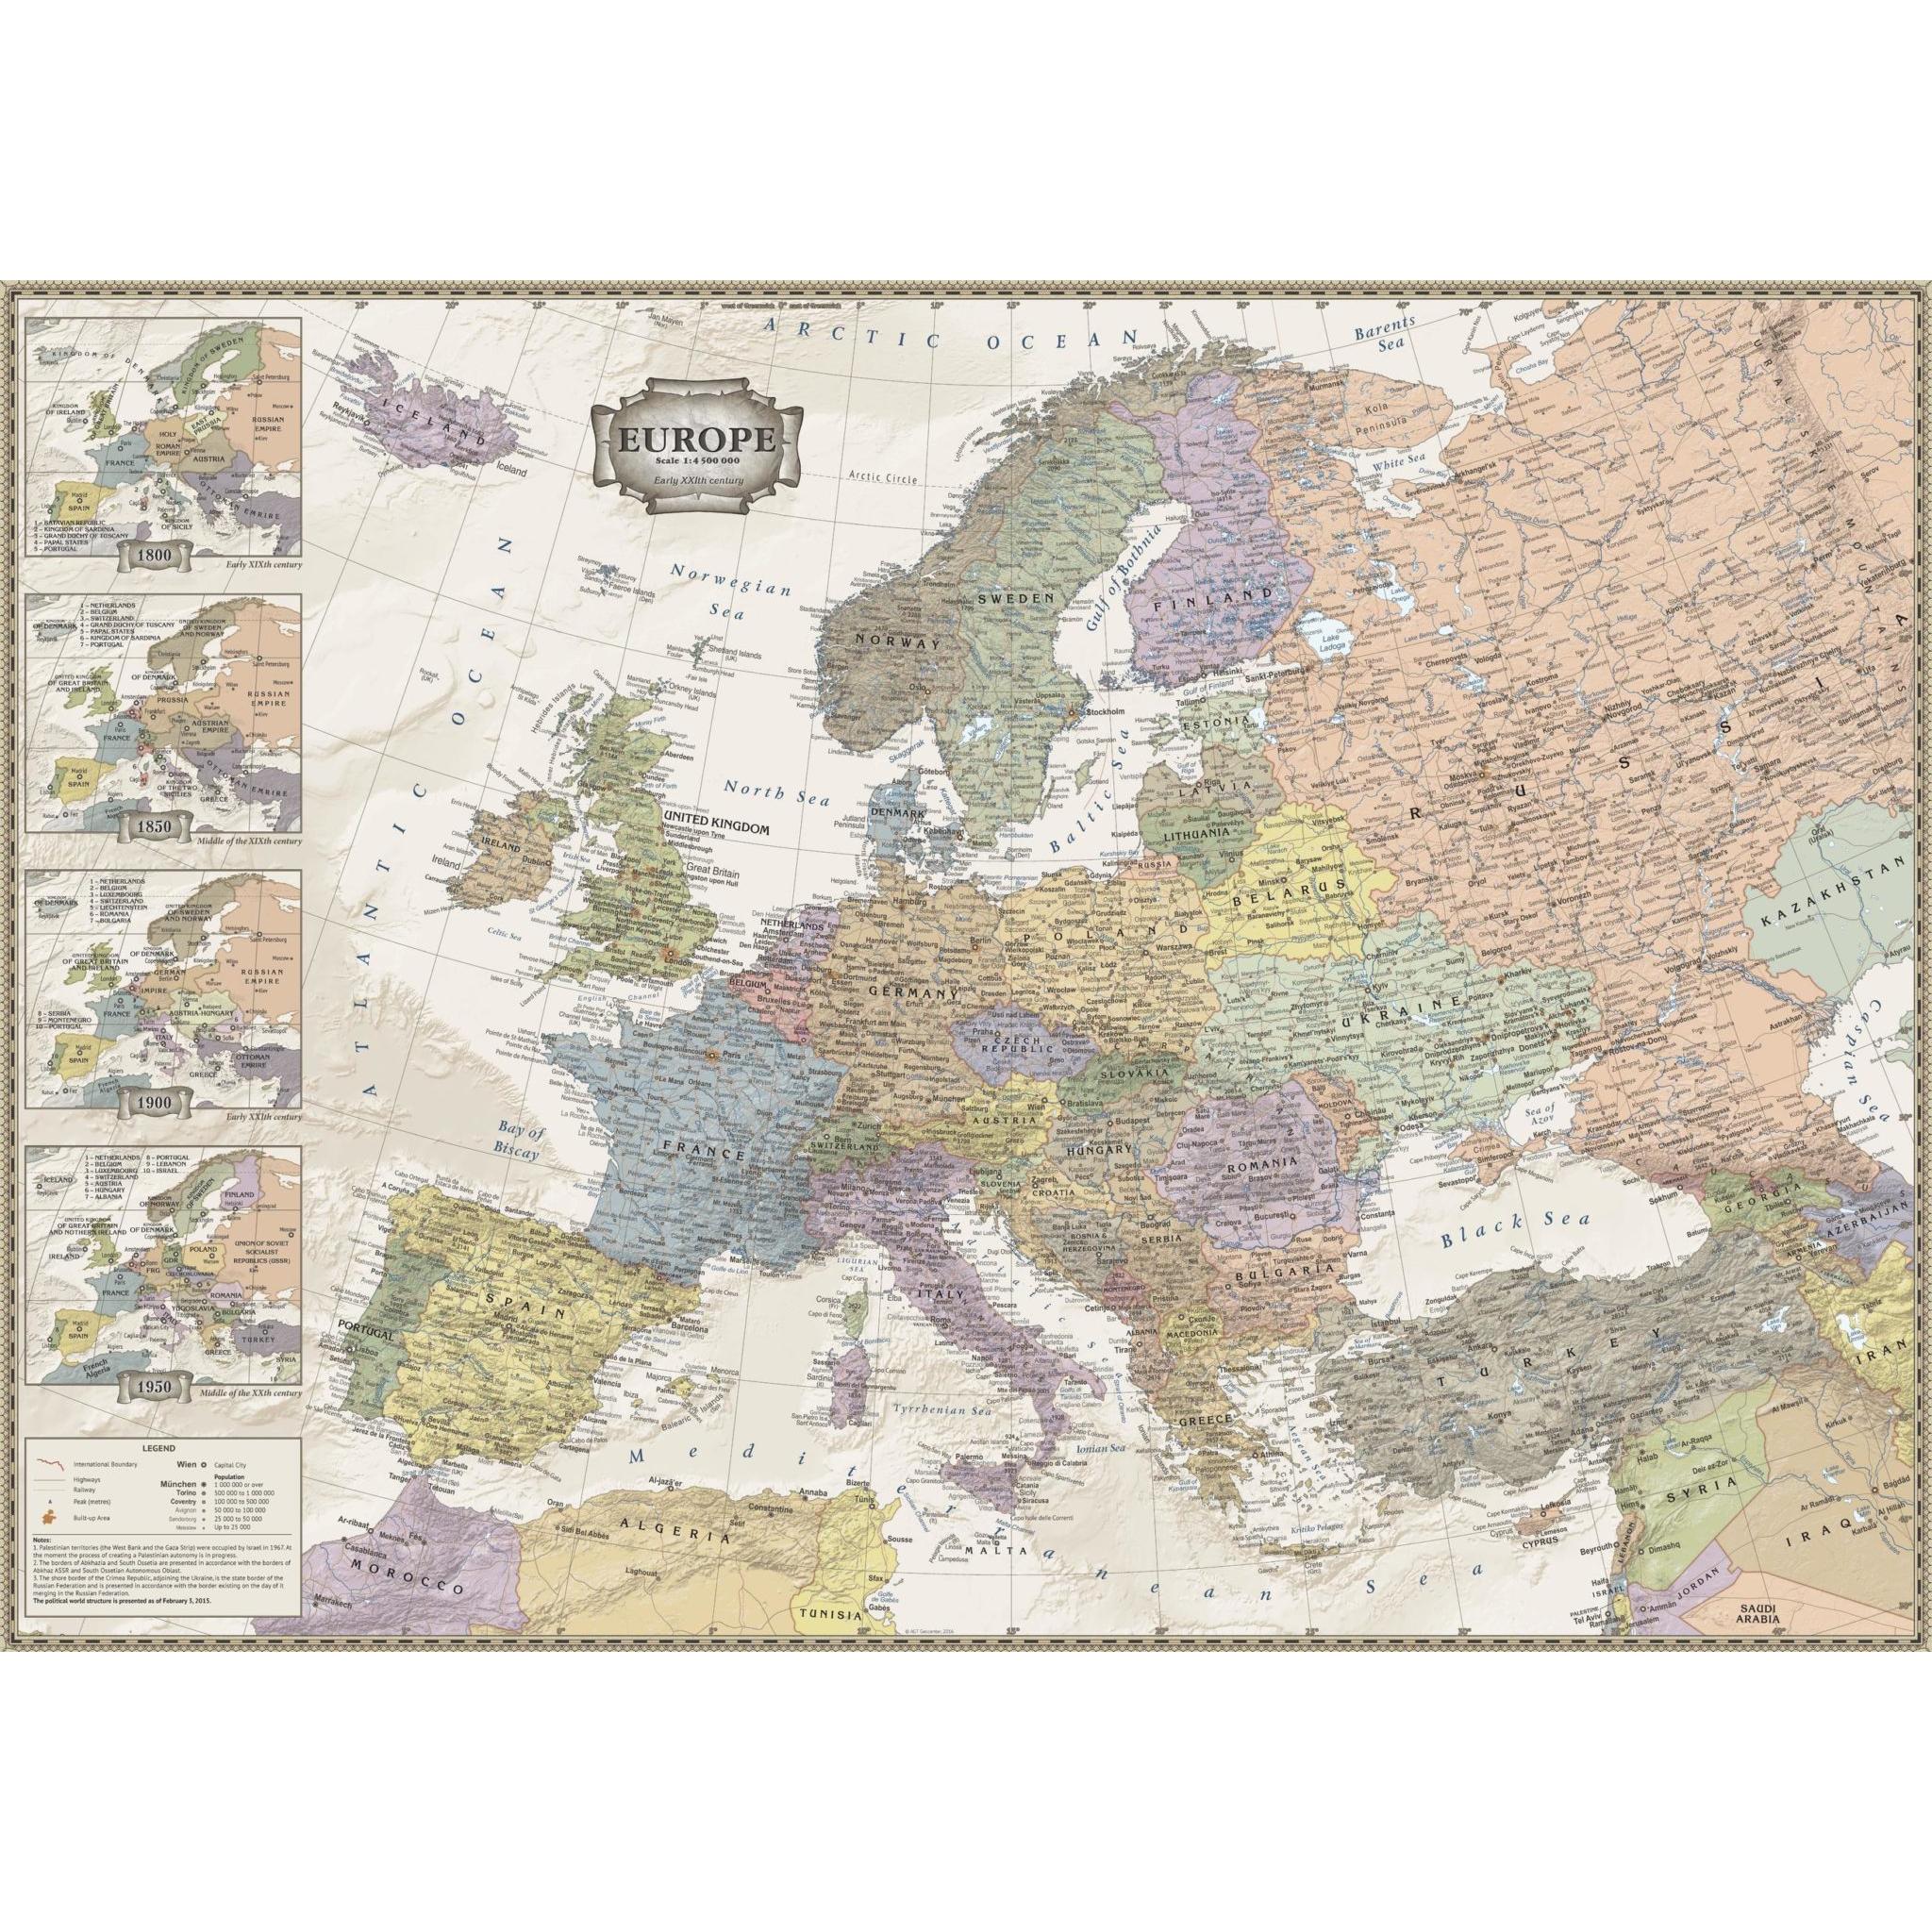 Wall Map Of Europe Map Of Western Hemisphere